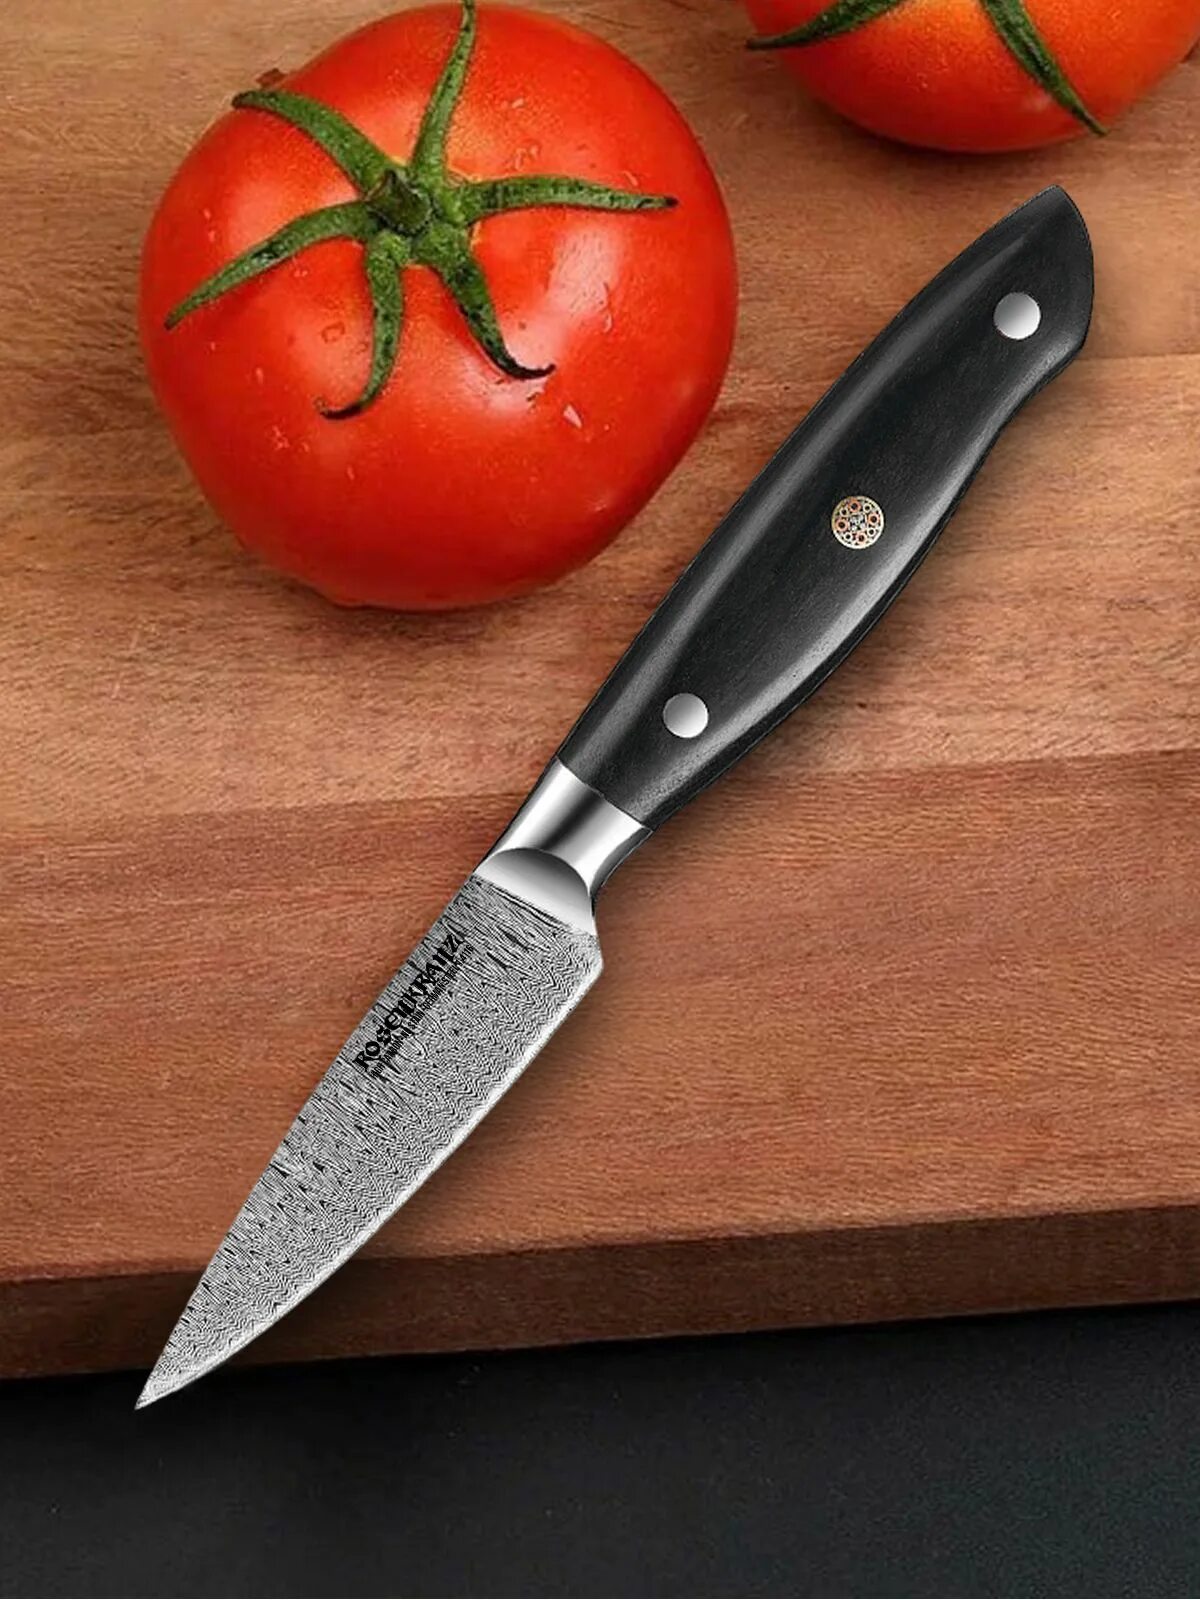 Кухонные ножи для овощей. Paring Knife кухонный нож. G10 кухня нож. Tramantina сантоку нож. Сталь vg10.